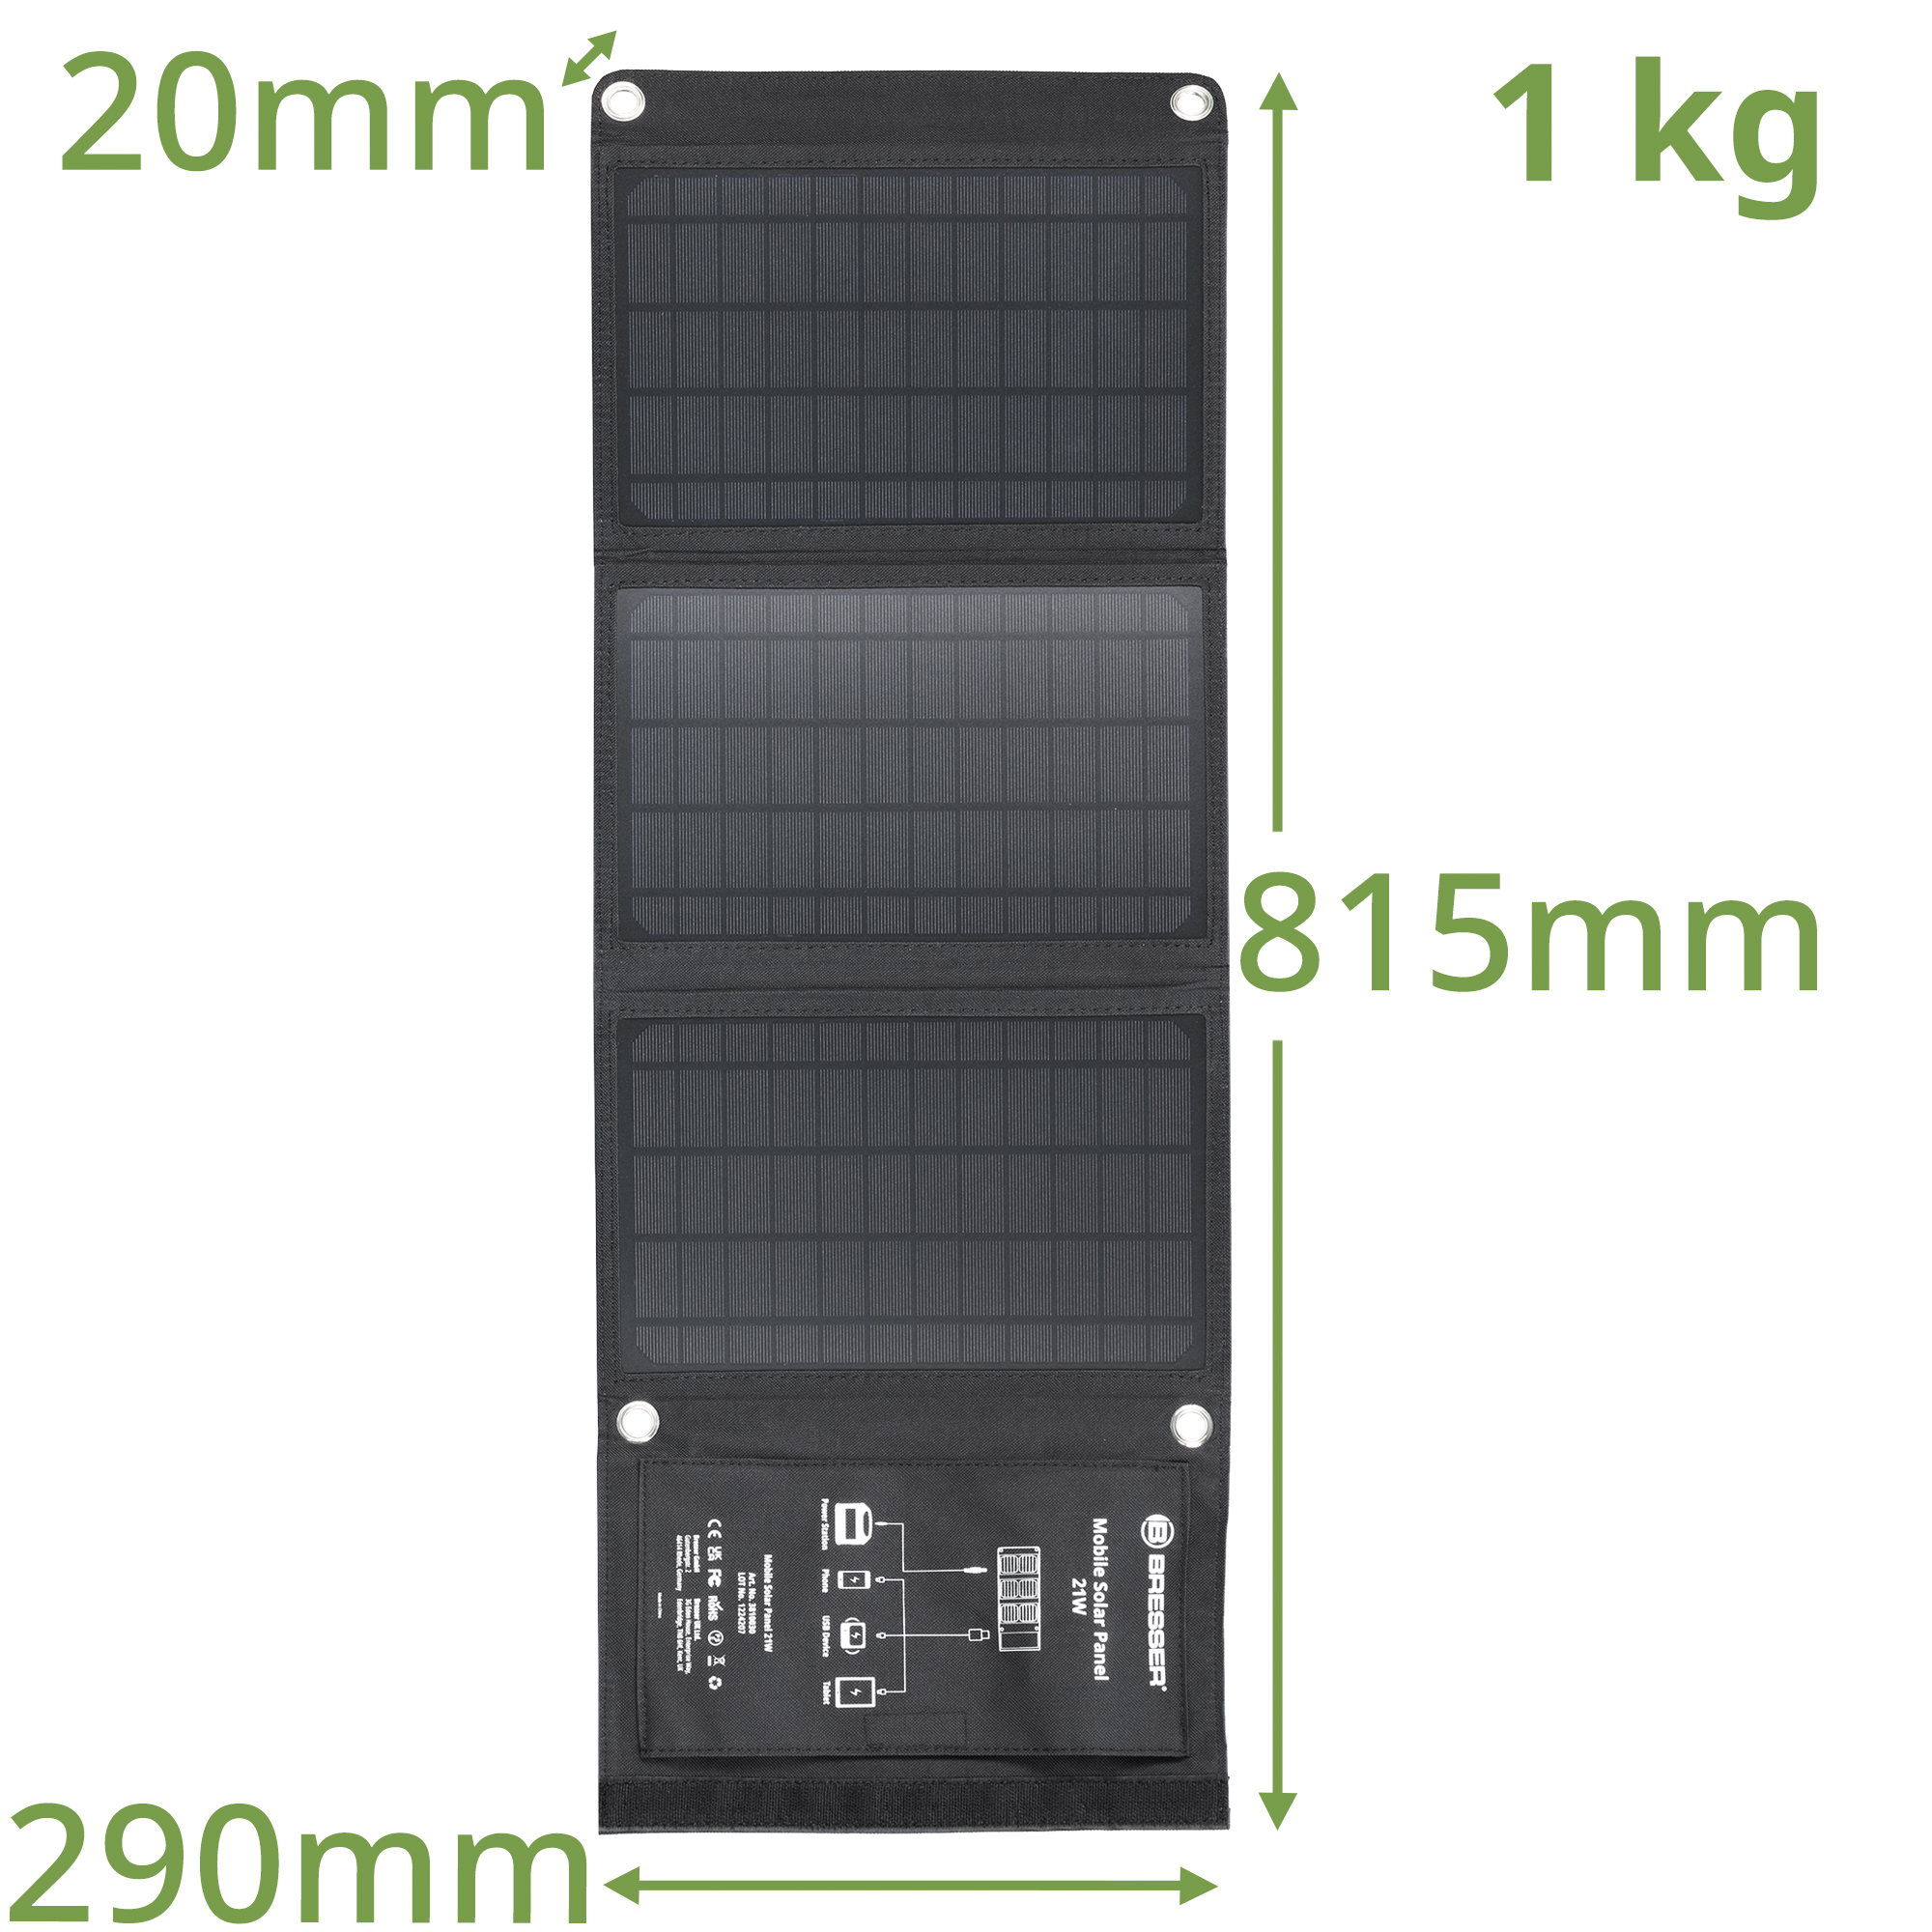 Bresser Mobile Solar Charger 21 Watt USB DC (3810030) Габаритные размеры